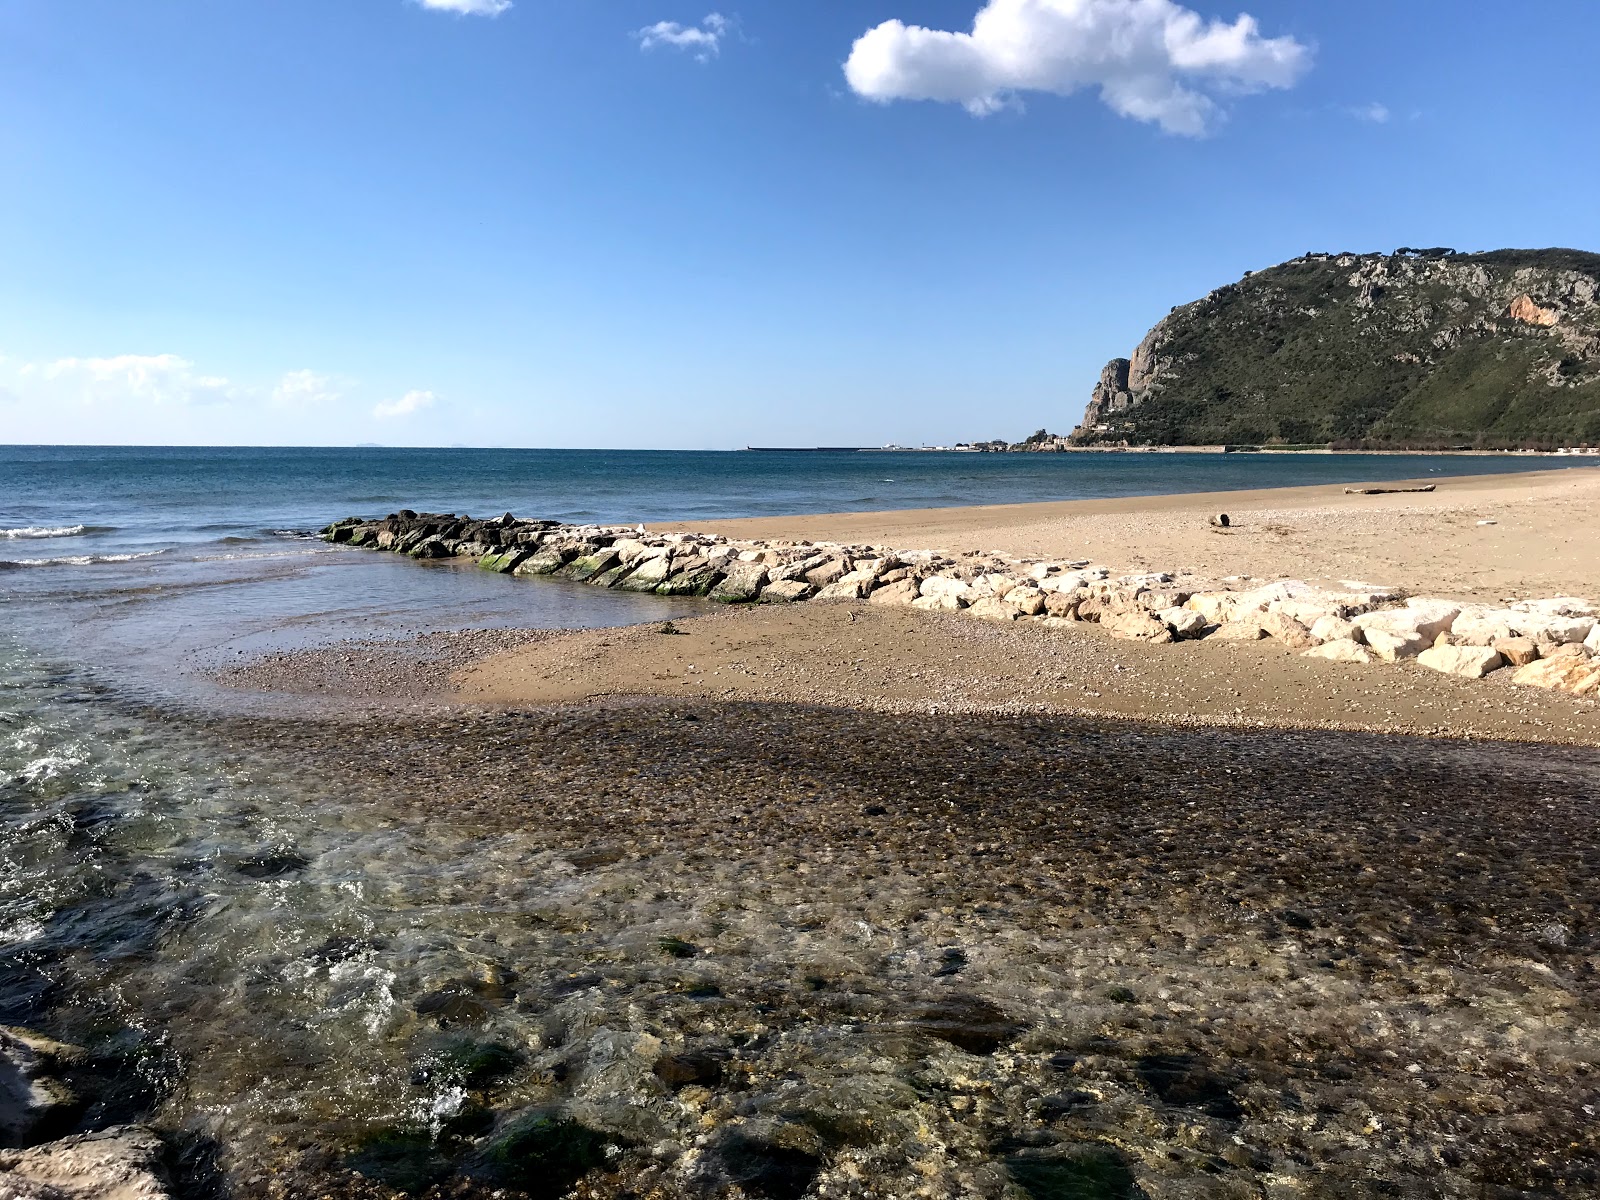 Foto di Fiumetta beach ubicato in zona naturale